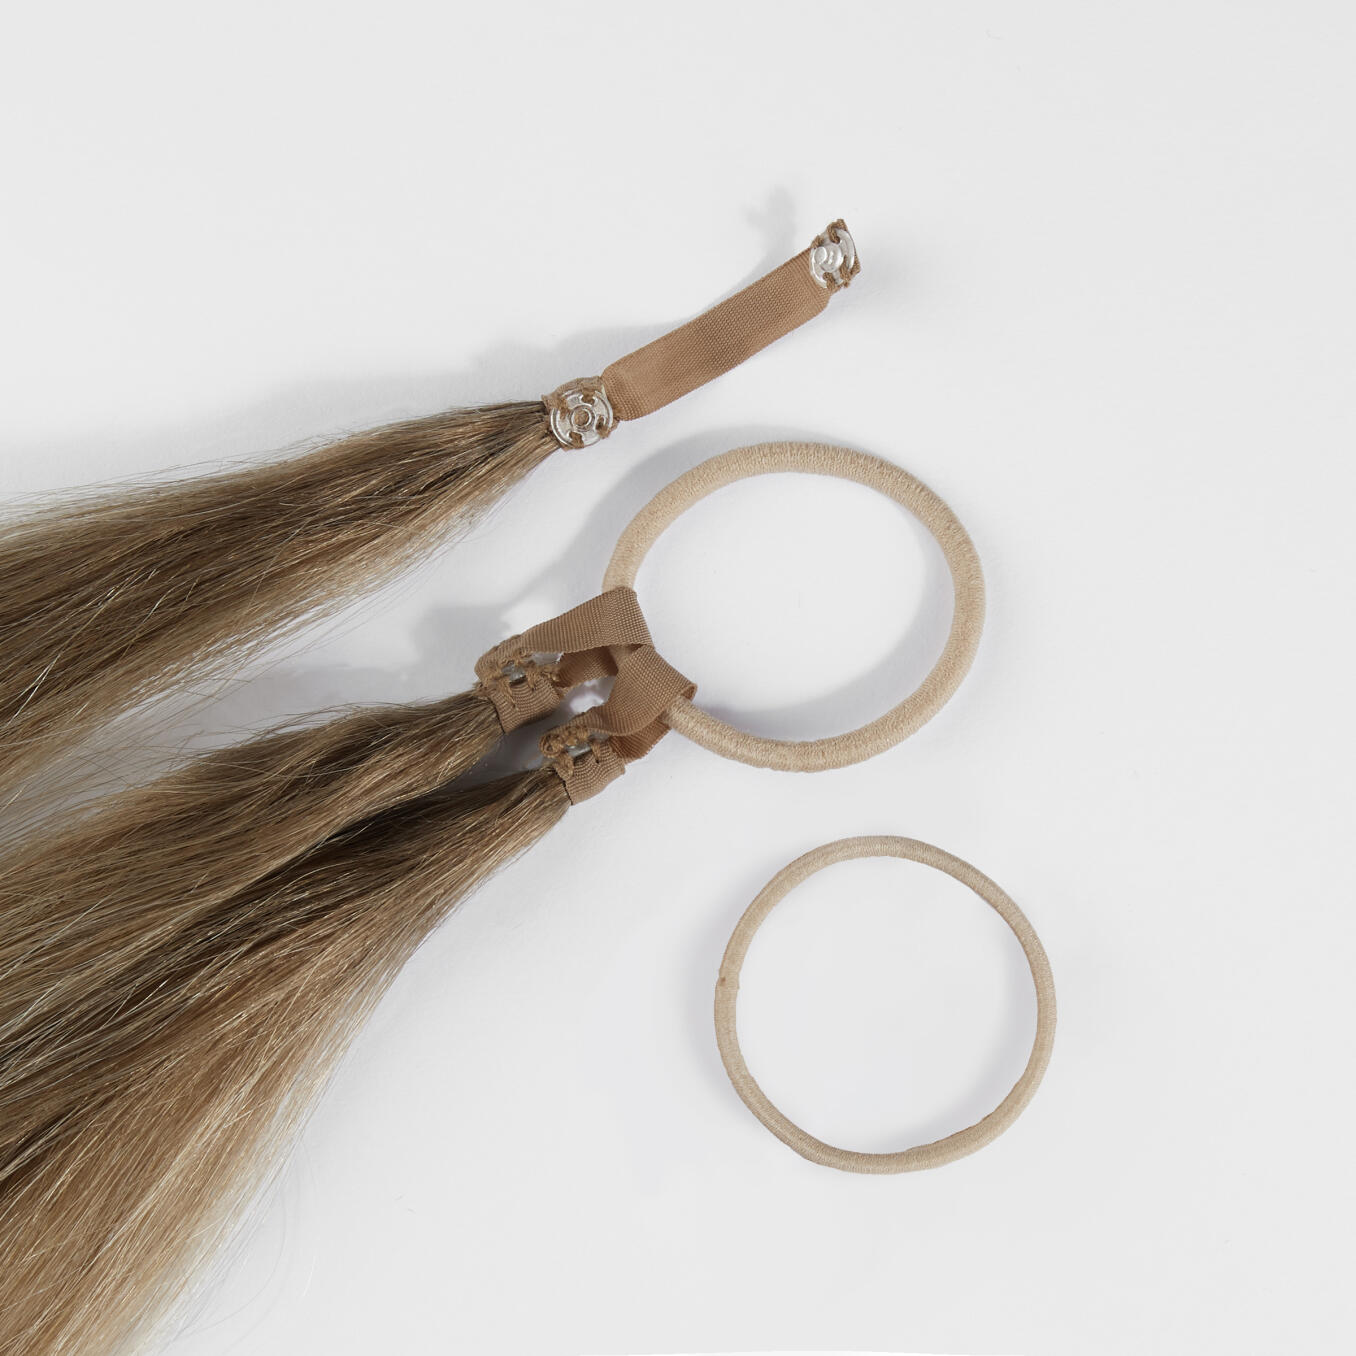 Easy Braid Extensions For voluminous braids B5.1/7.3 Brown Ash Blonde Balayage 55 cm